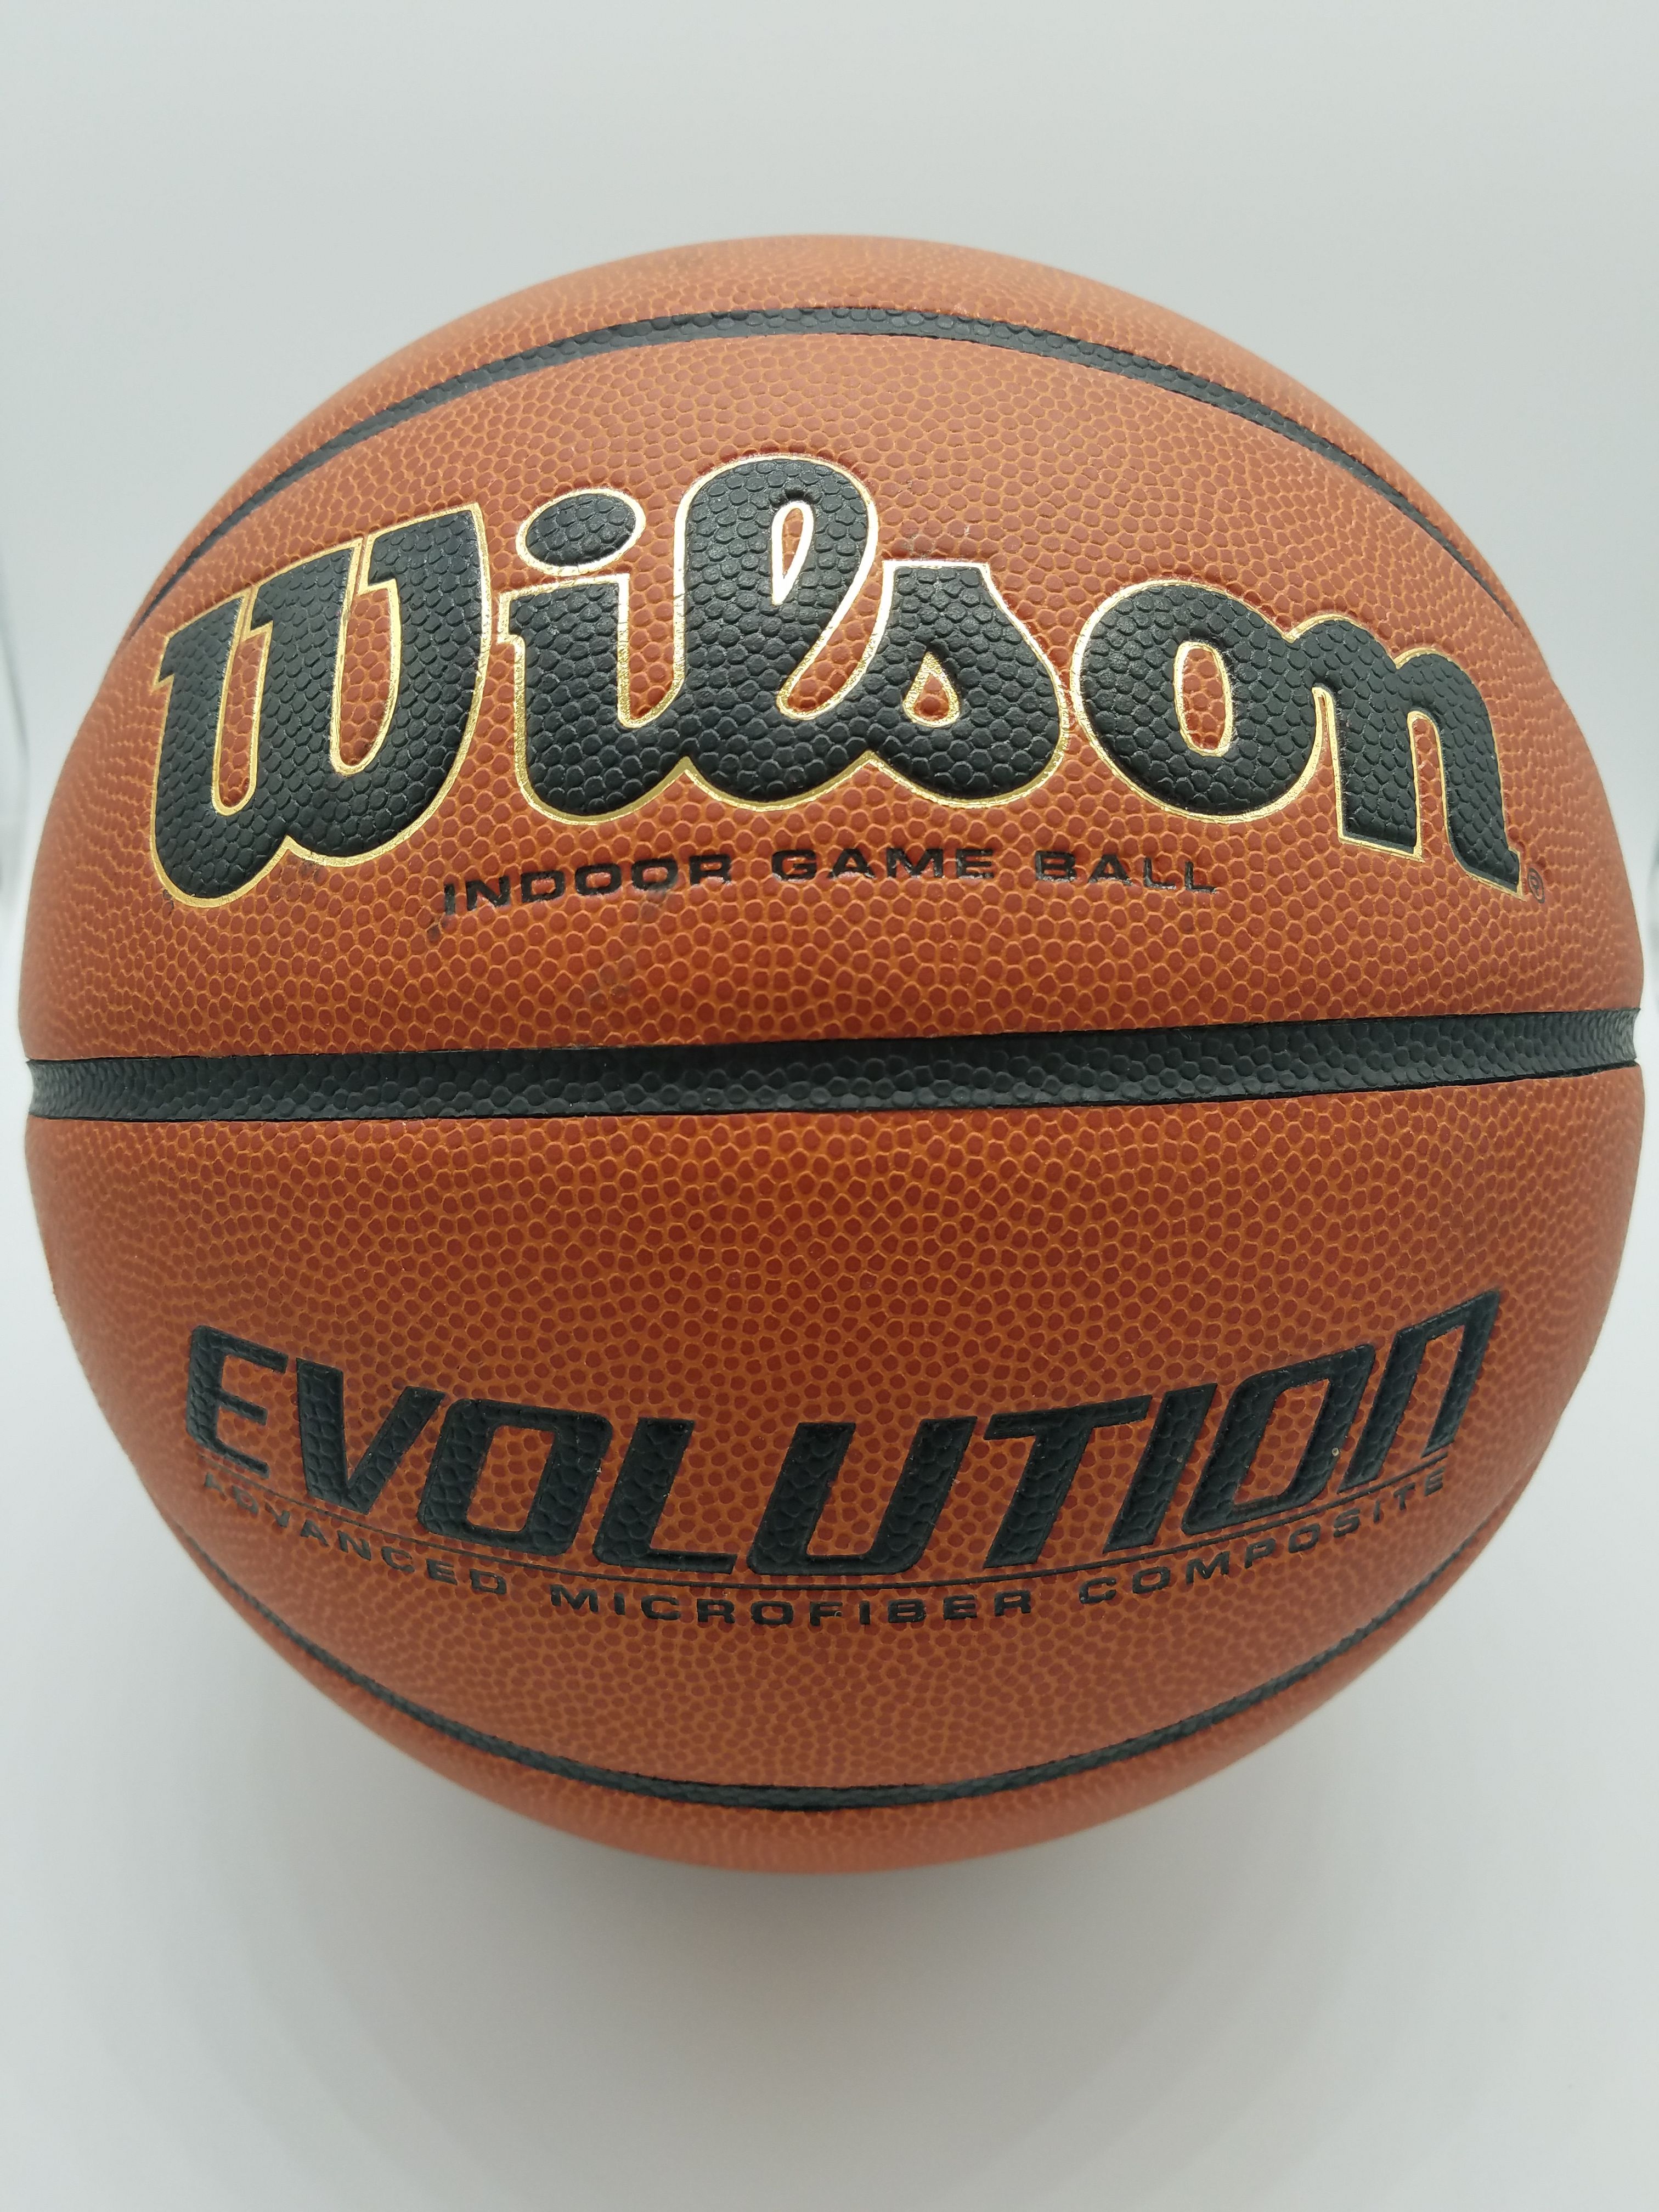 Wilson Evolution 29.5 Indoor Game Basketball SUPER SOFT Leather! WTB0516